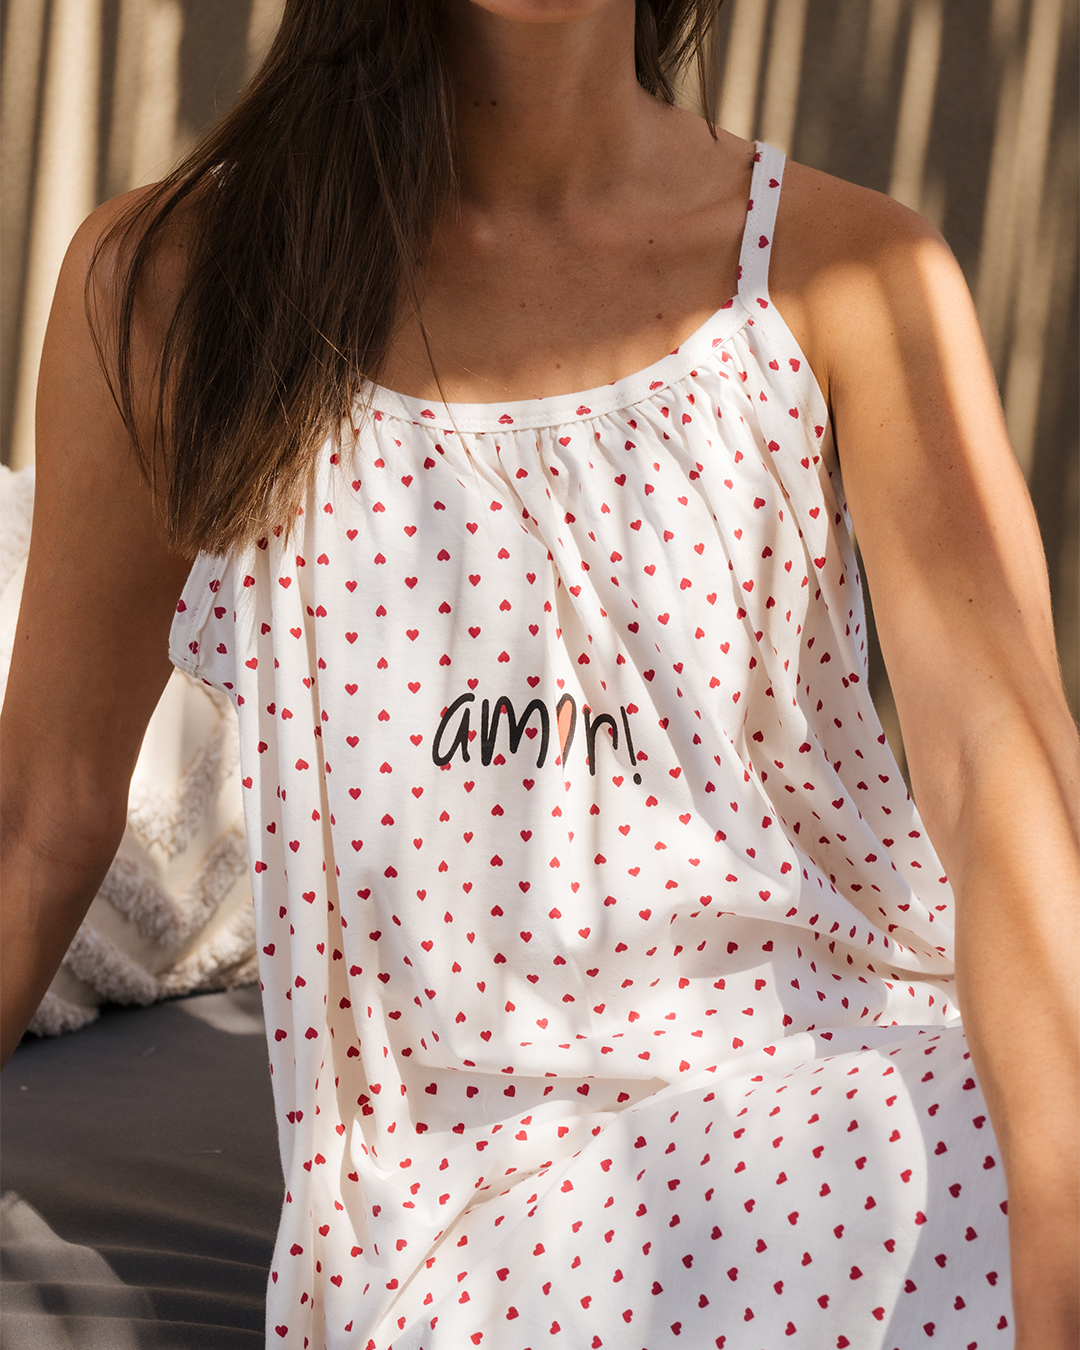 Amor women's nightgown